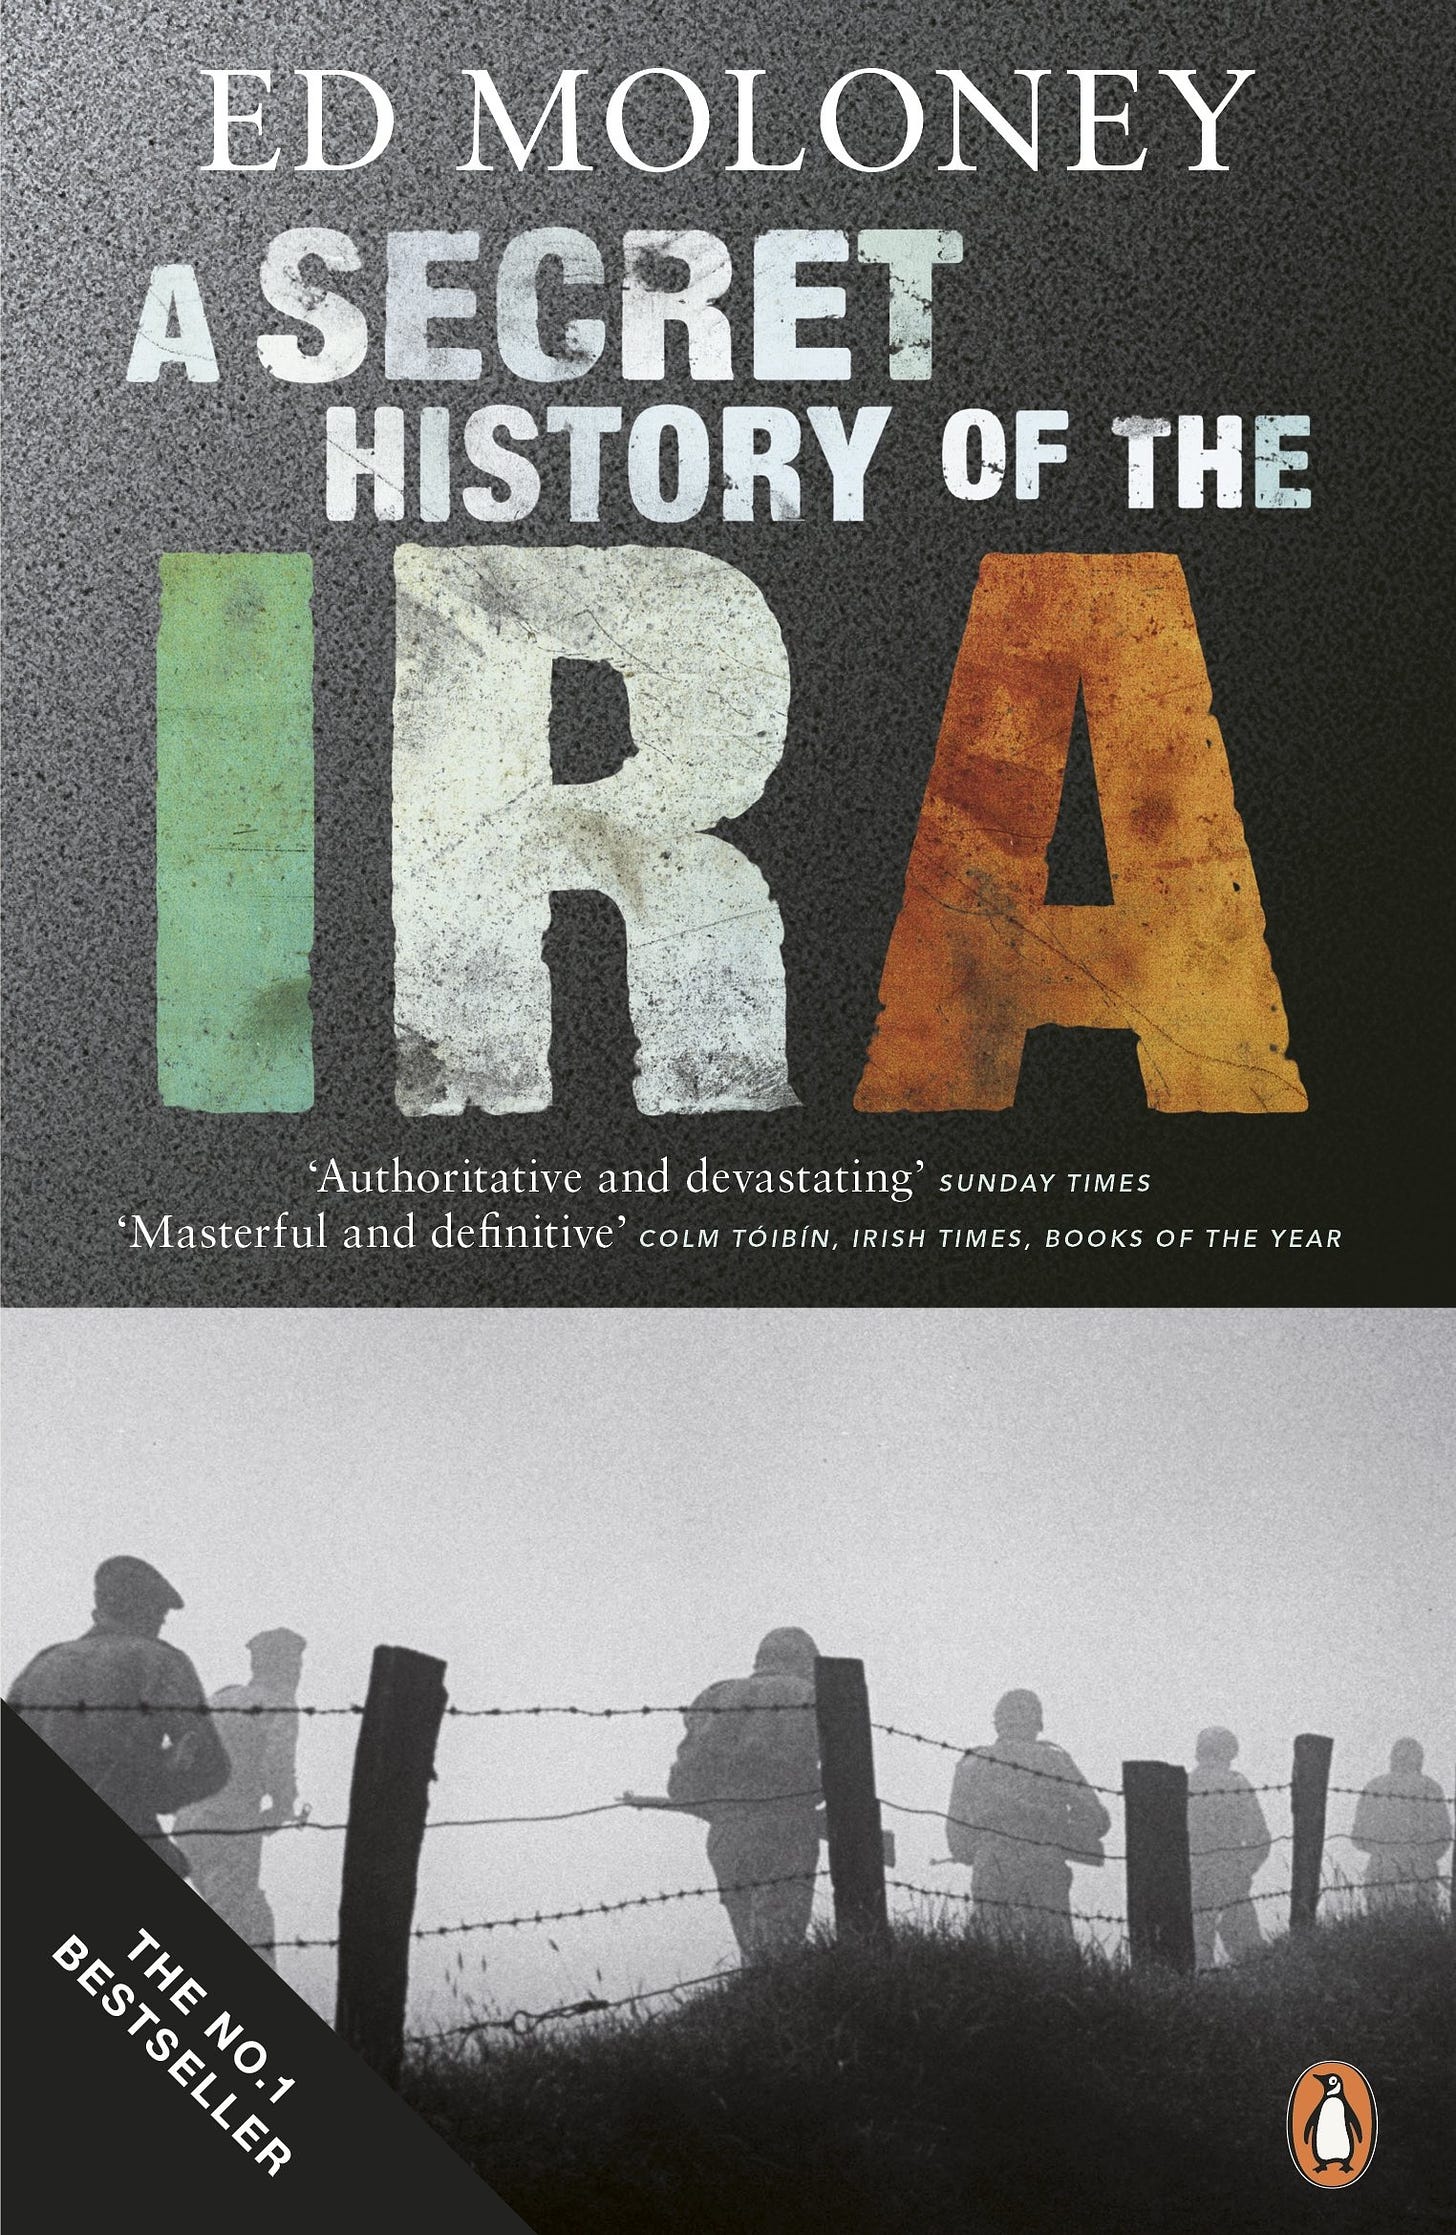 A Secret History of the IRA: Amazon.co.uk: Moloney, Ed: 9780141028767: Books